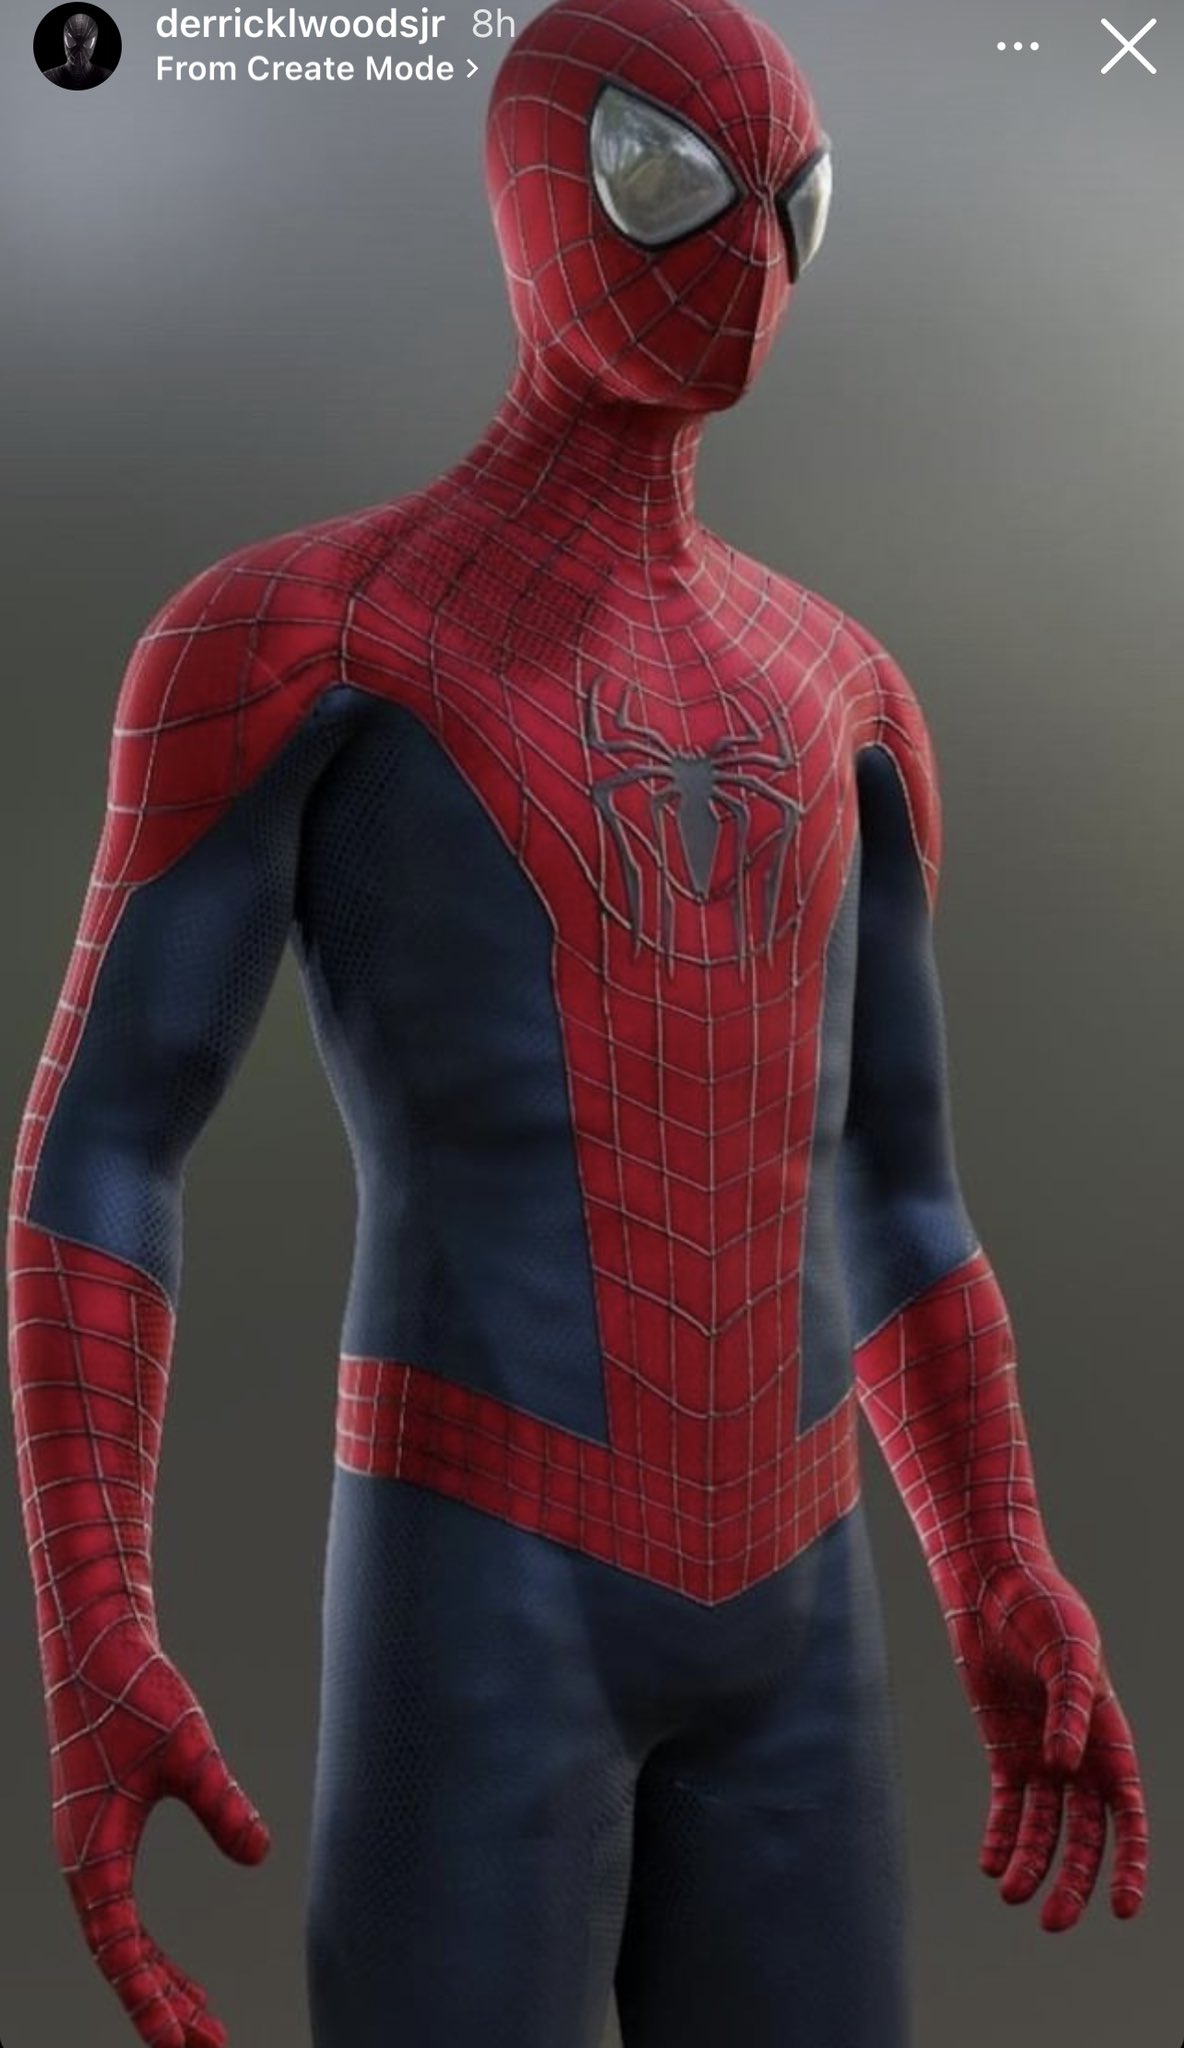 The amazing spider man 3